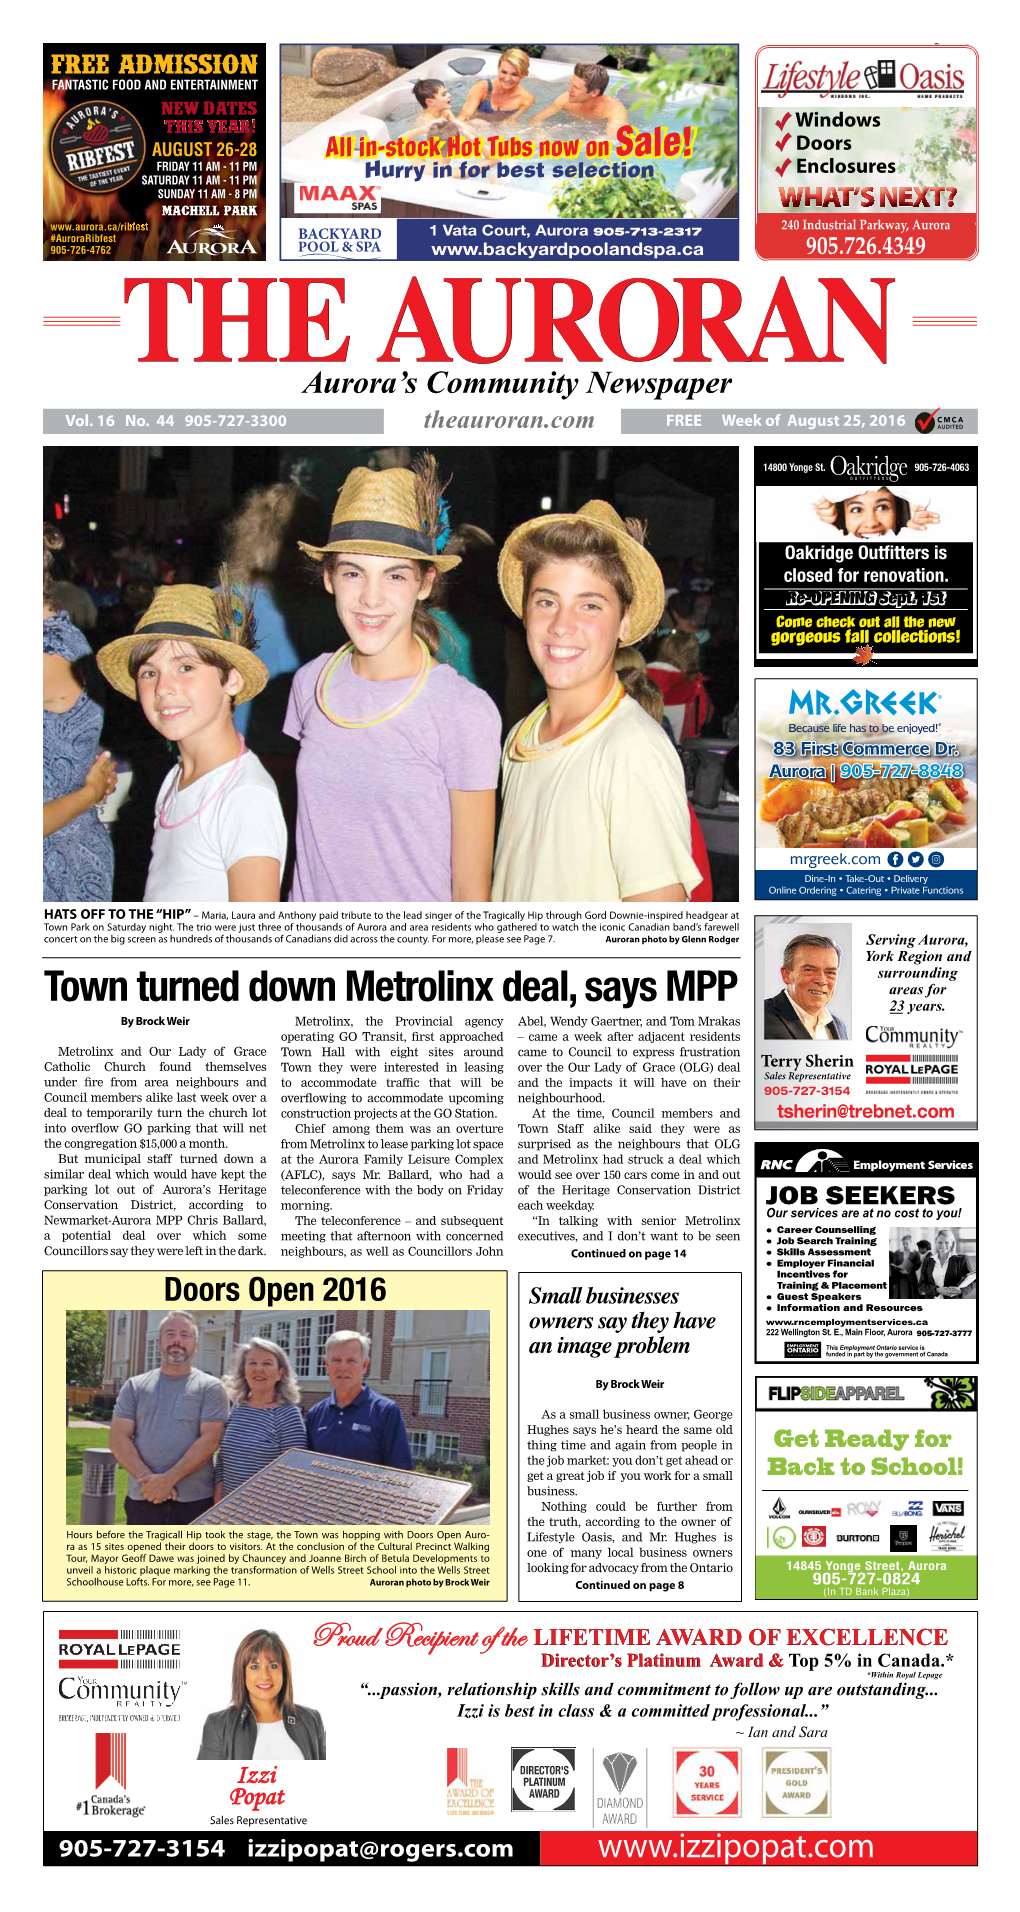 Town Turned Down Metrolinx Deal, Says MPP 23 Years